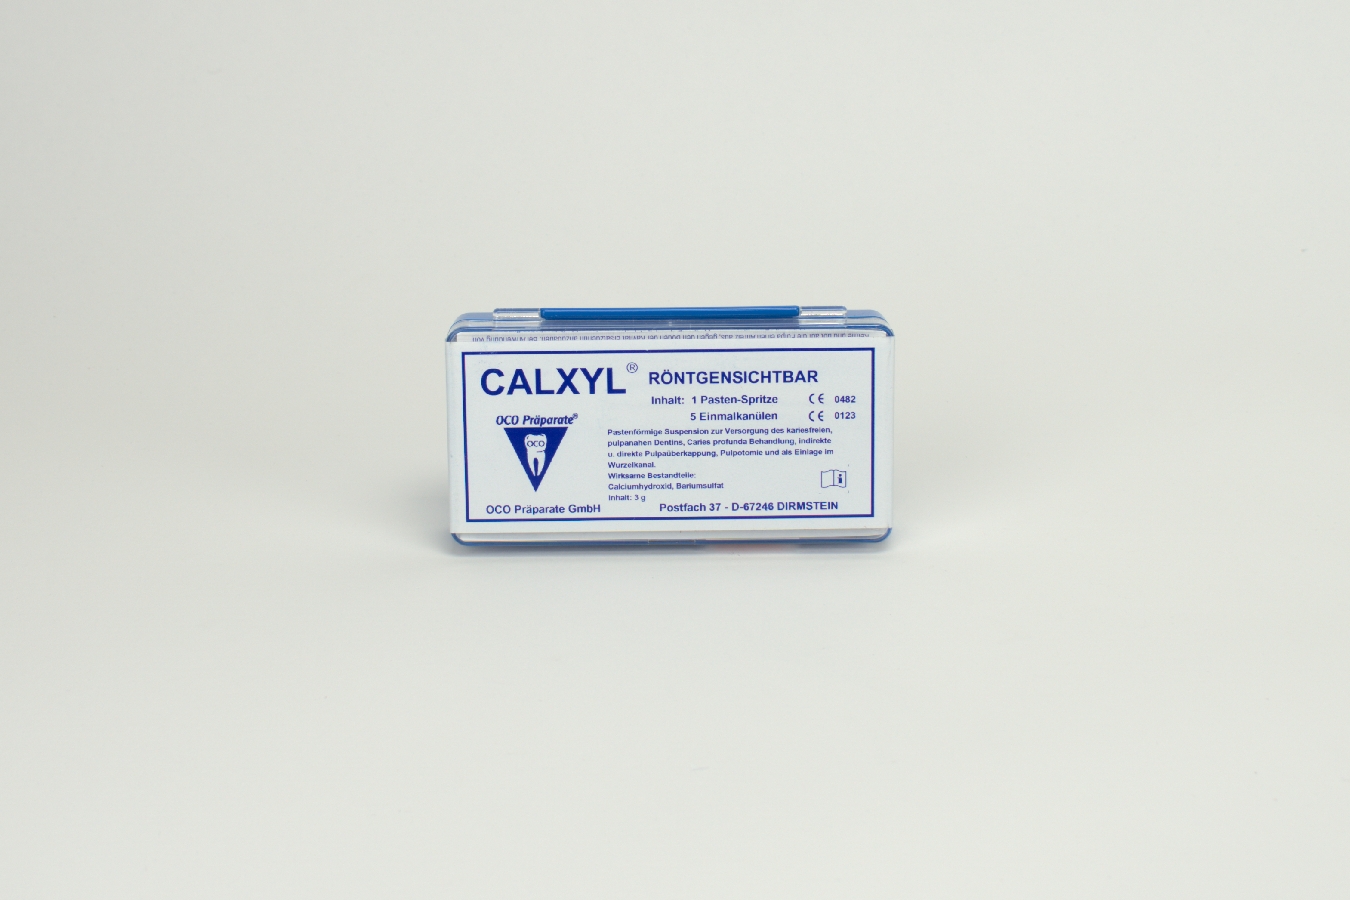 Calxyl blau Pasten-Spritze 3gr Op